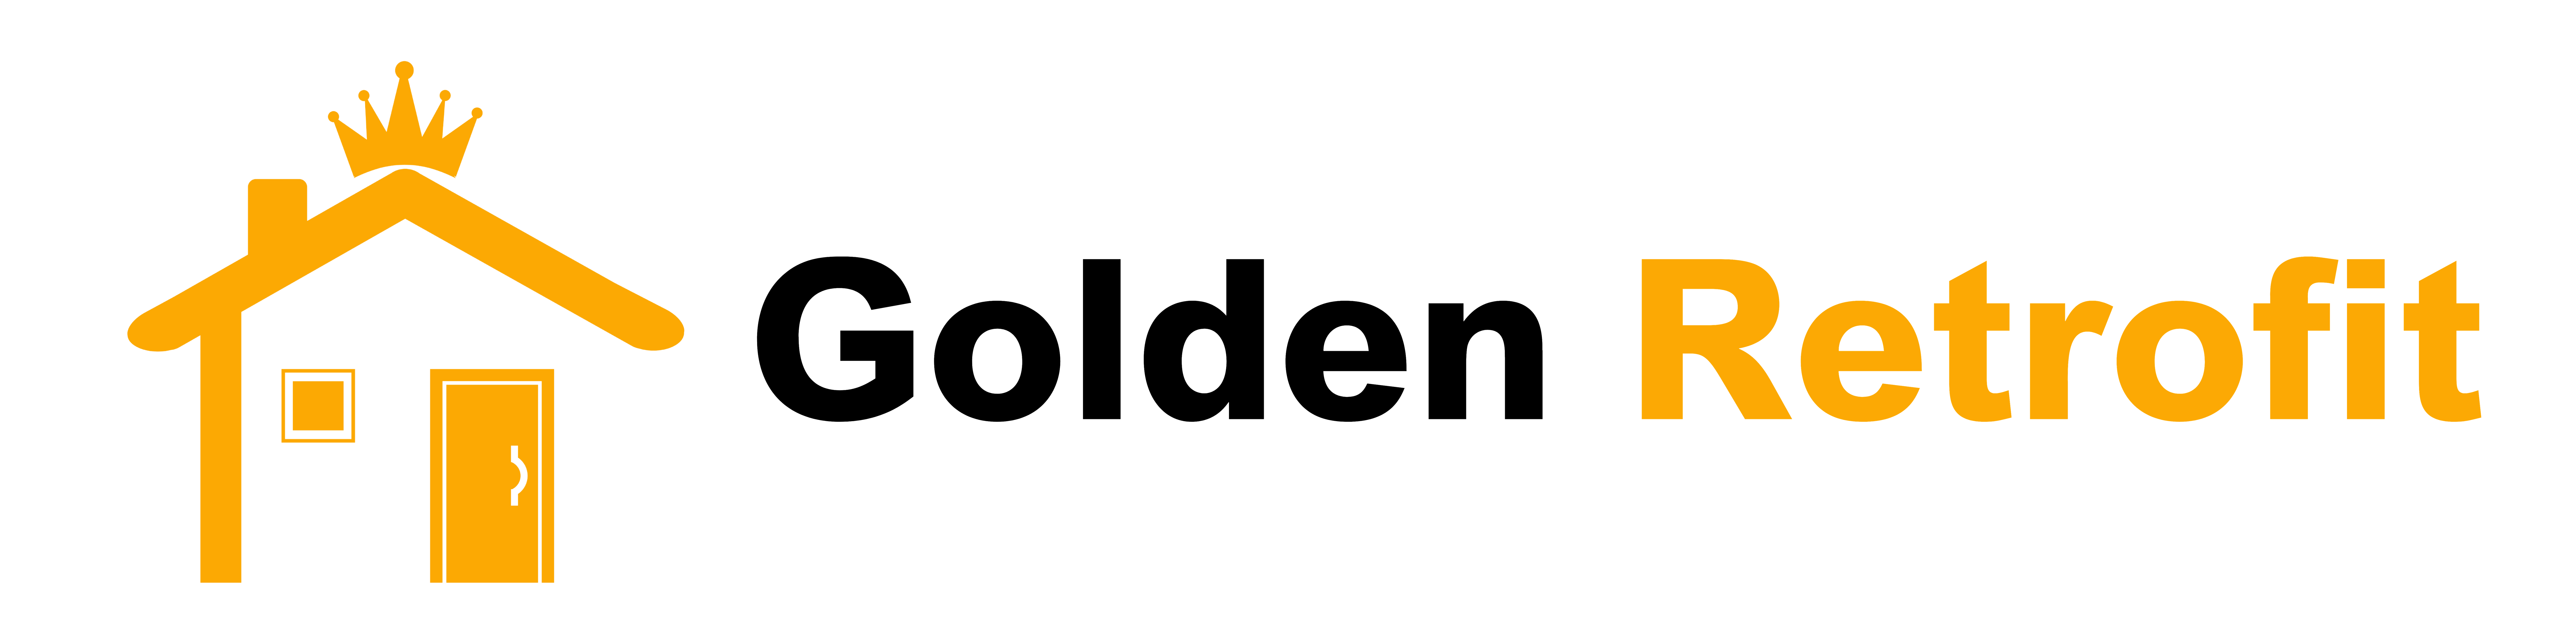 Golden Retrofit Logo